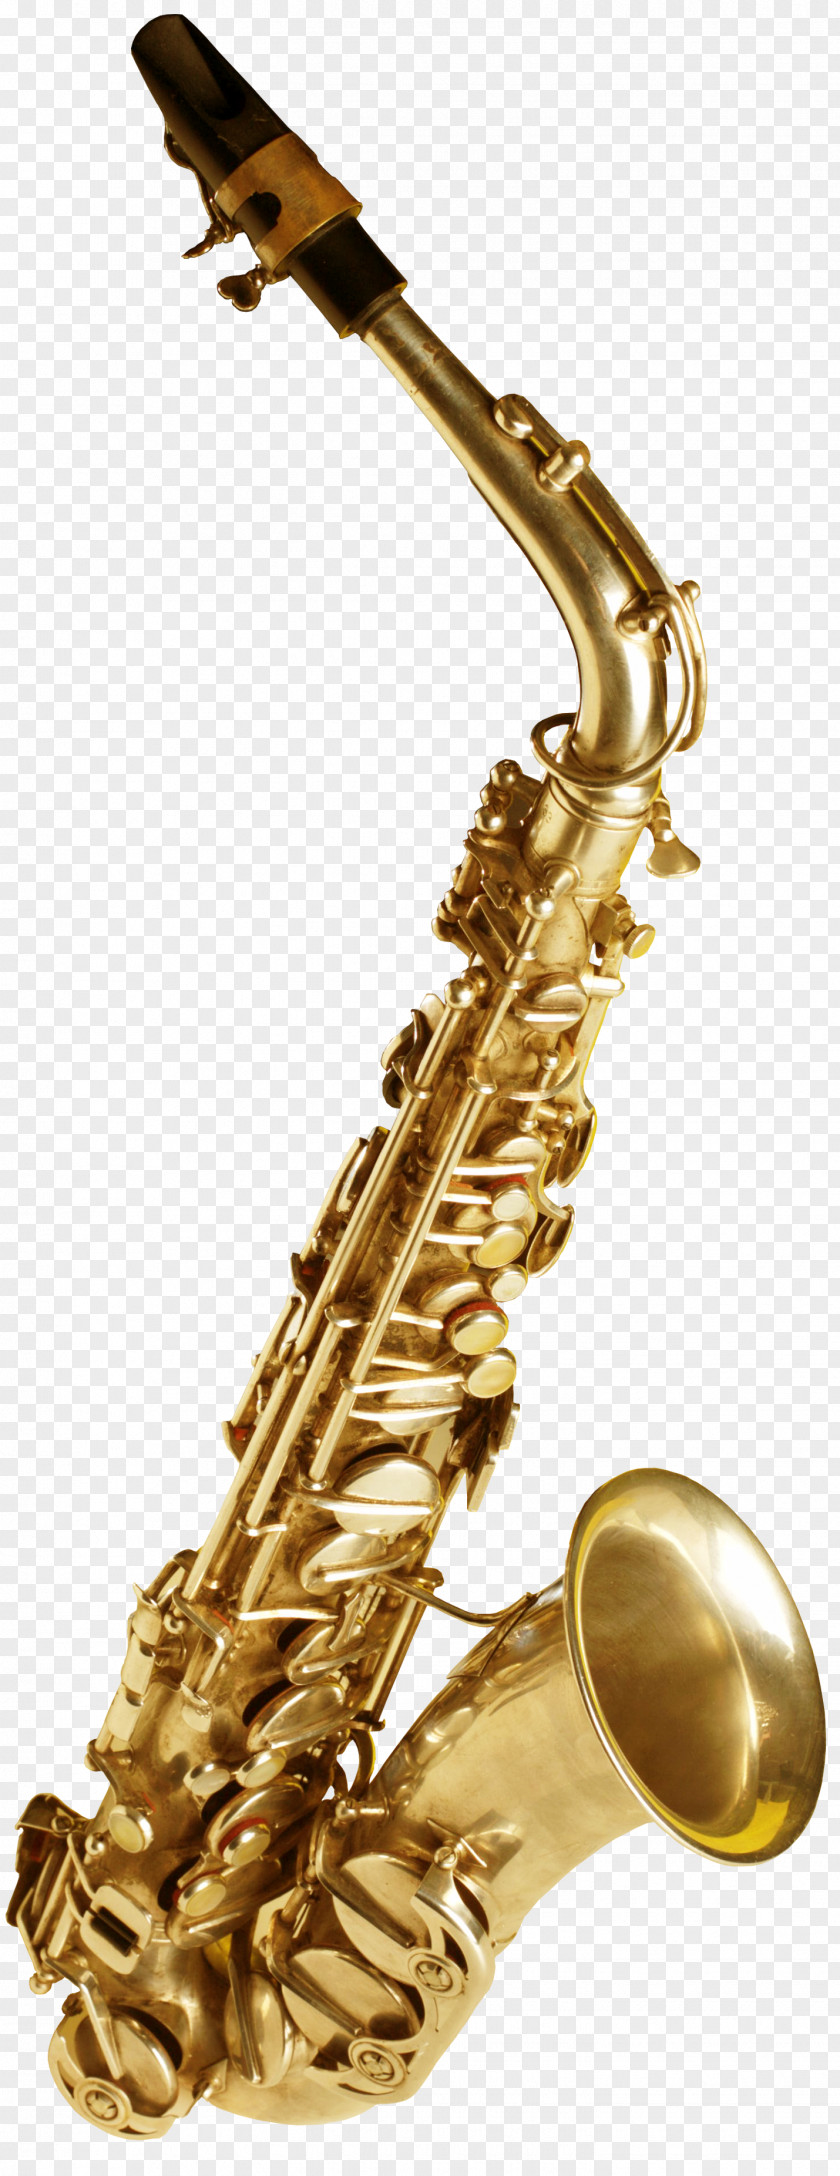 Sax Pictures Musical Instrument Saxophone Clip Art PNG